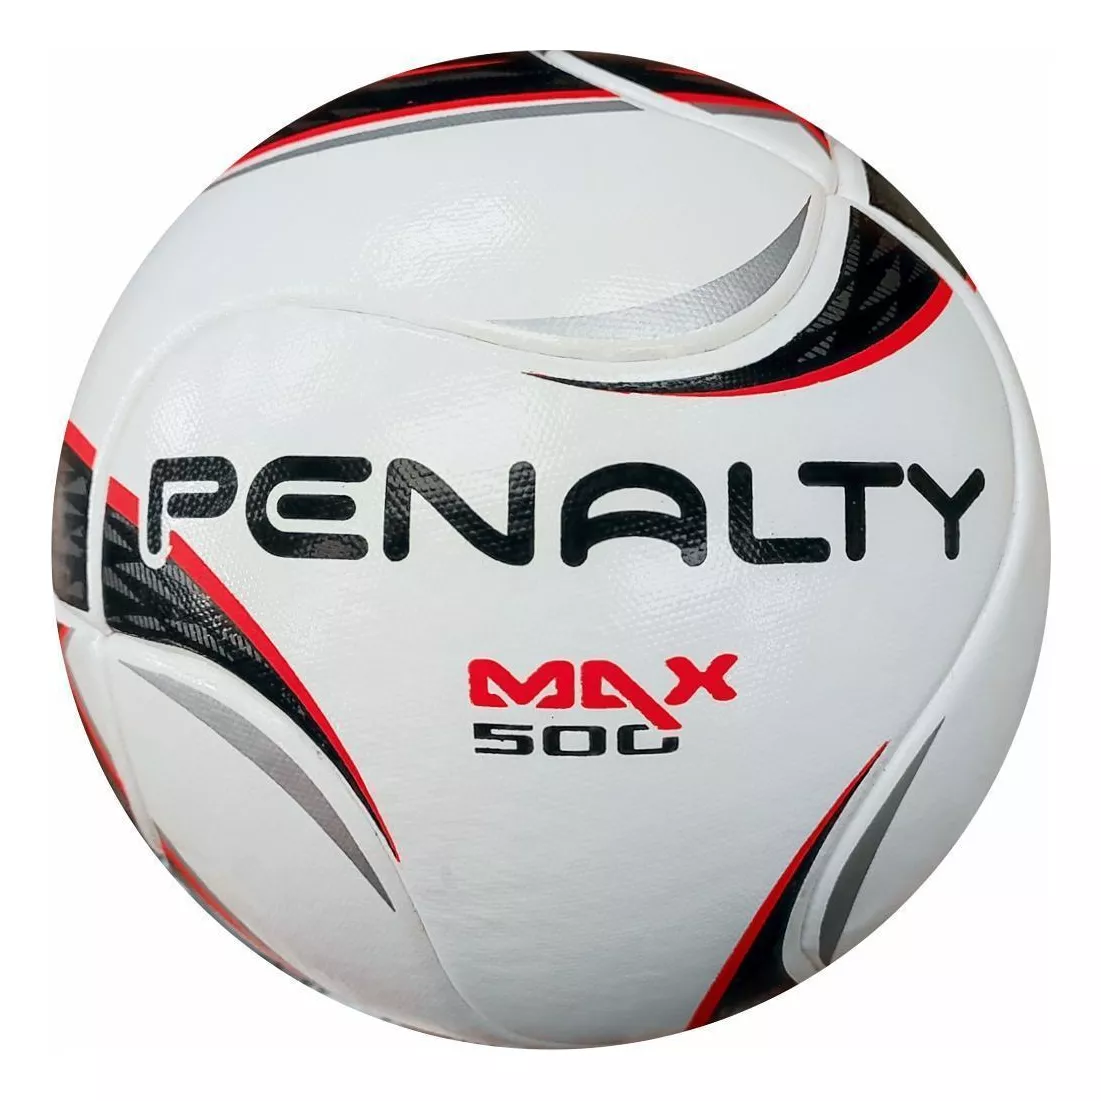 Segunda imagem para pesquisa de bola futsal penalty max 300